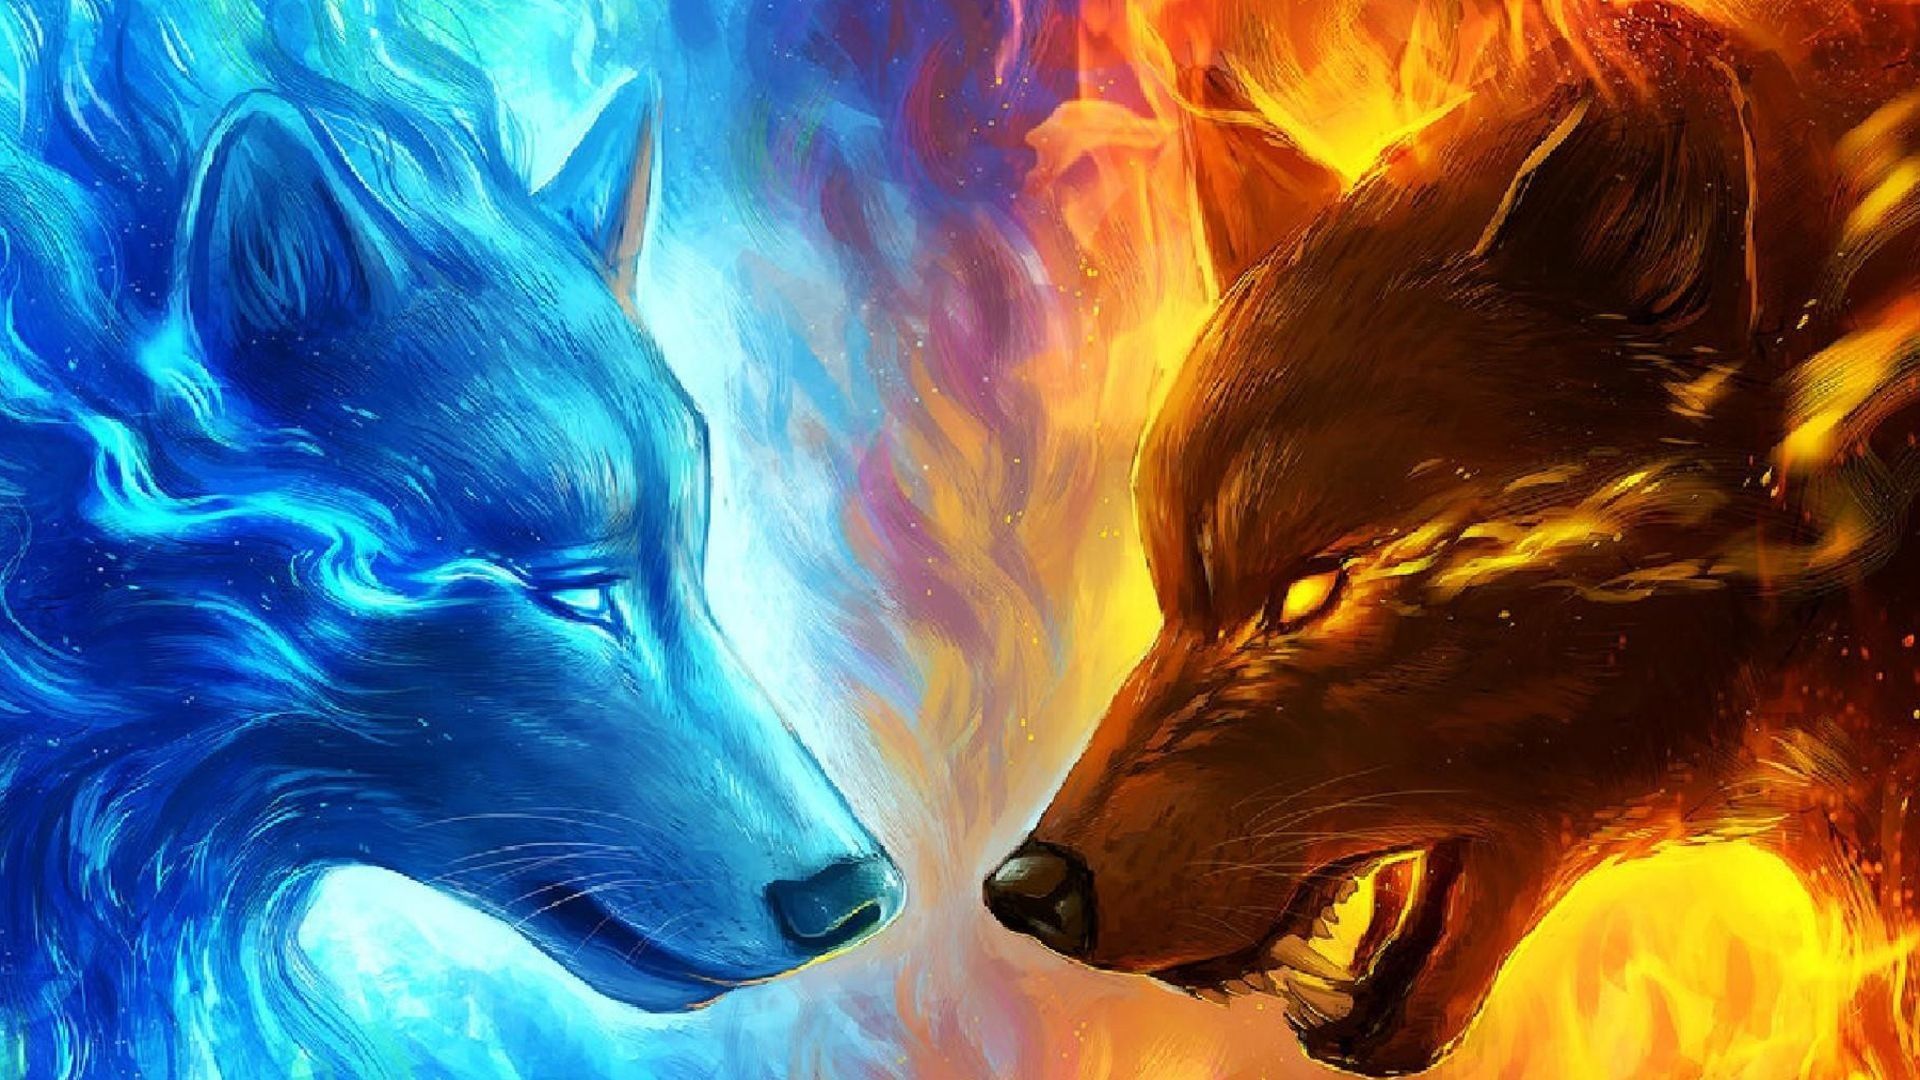 Beautiful Blue Fire Wolf. Ice wolf wallpaper, Wolf wallpaper, Fantasy wolf